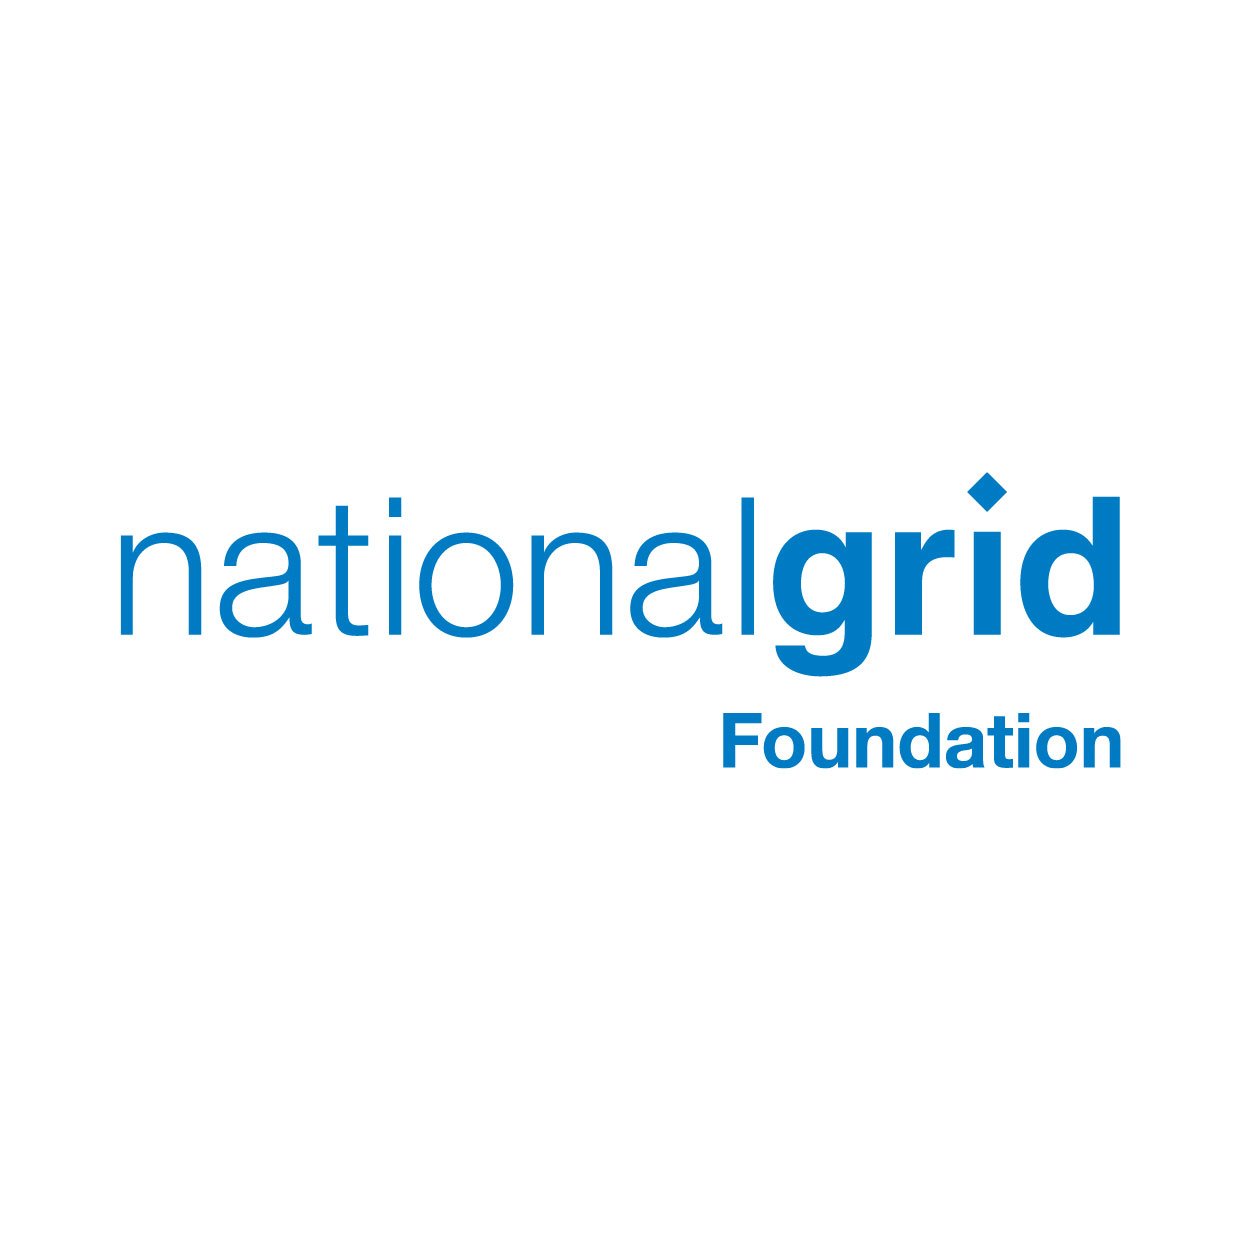 National Grid Foundation logo